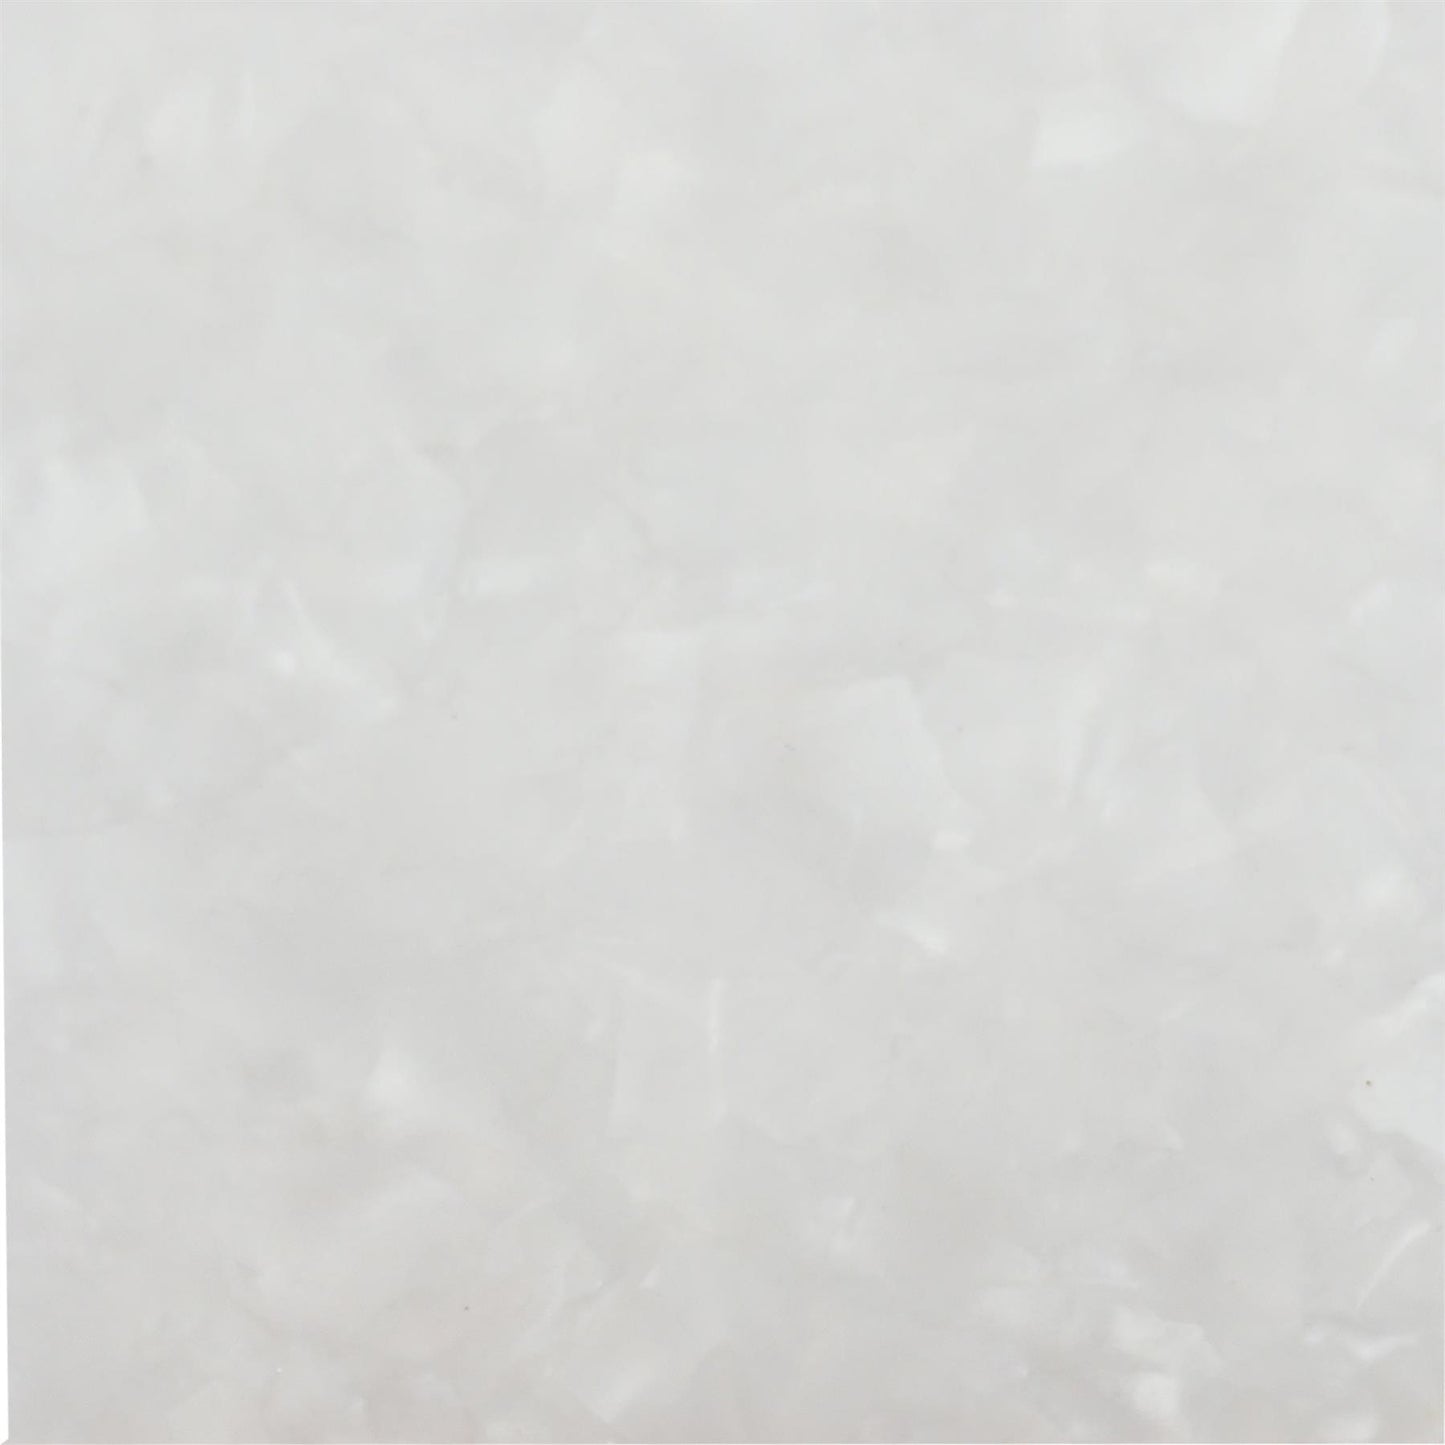 Incudo White Pearloid Acrylic Sheet - 500x300x3mm